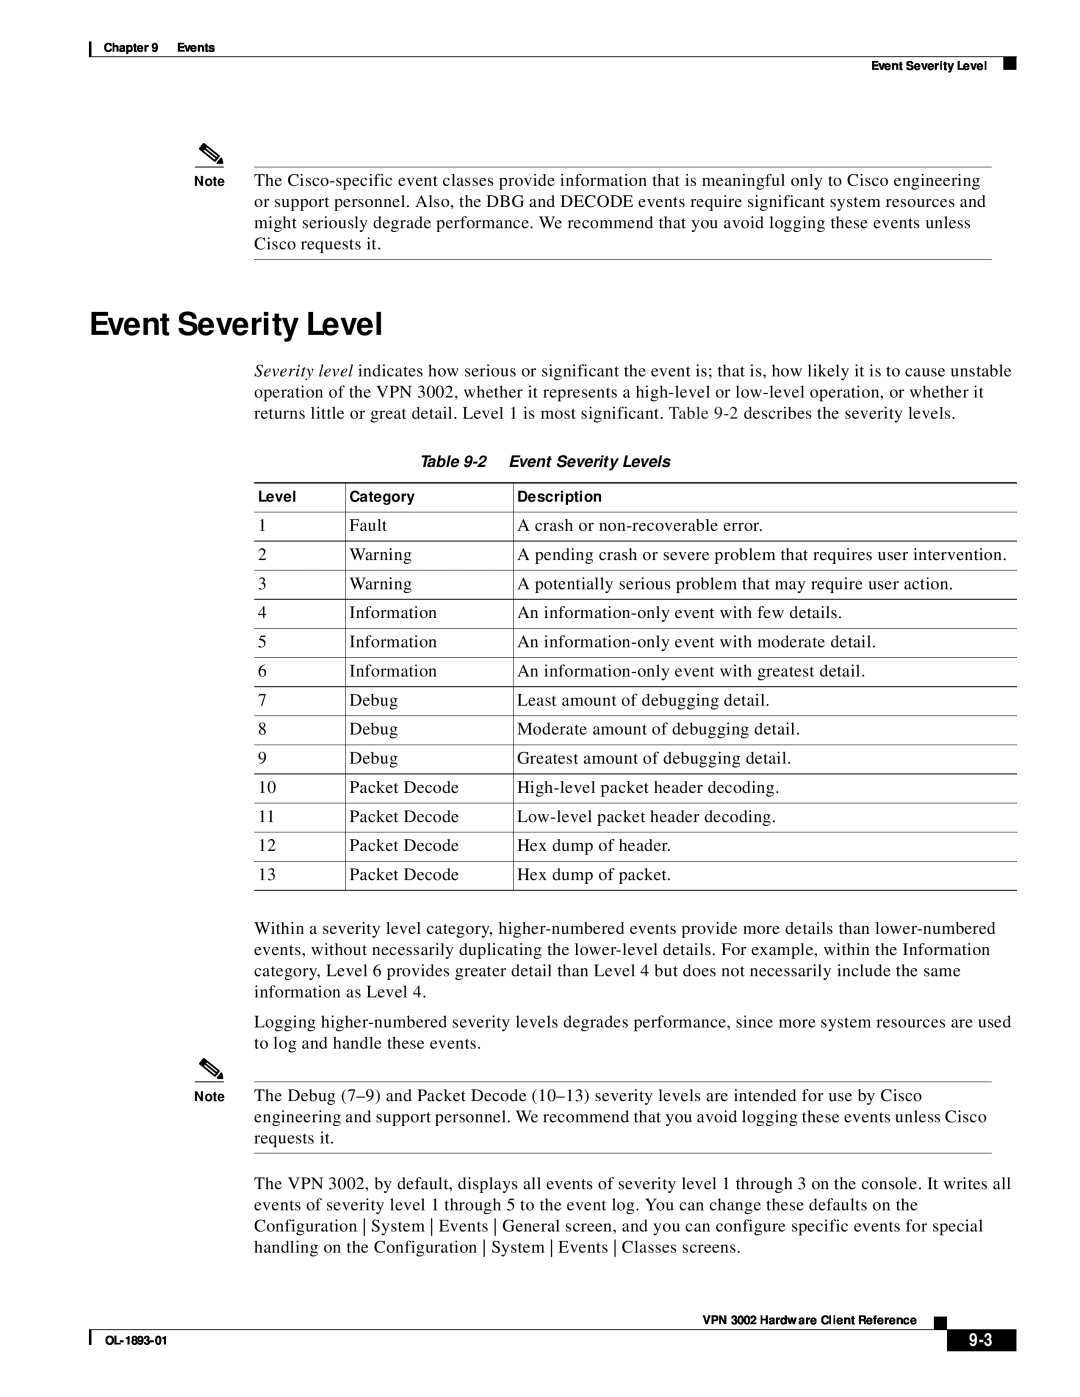 Cisco Systems VPN 3002 manual Event Severity Level, Category, Description 